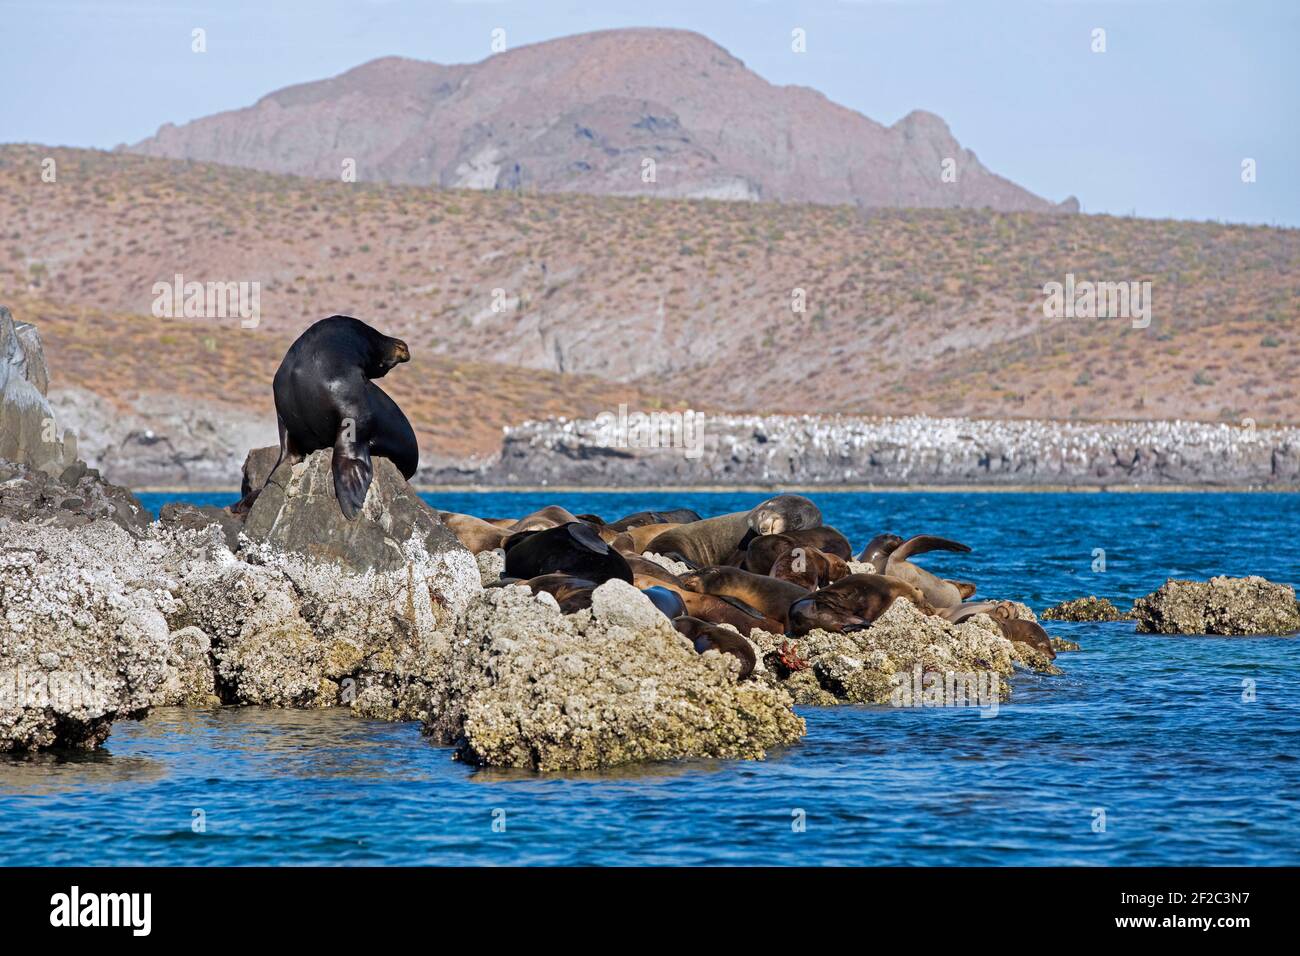 Male / bull sea lion with females basking on rock in the Gulf of California at Isla Espíritu Santo, island near La Paz, Baja California Cruz, Mexico Stock Photo